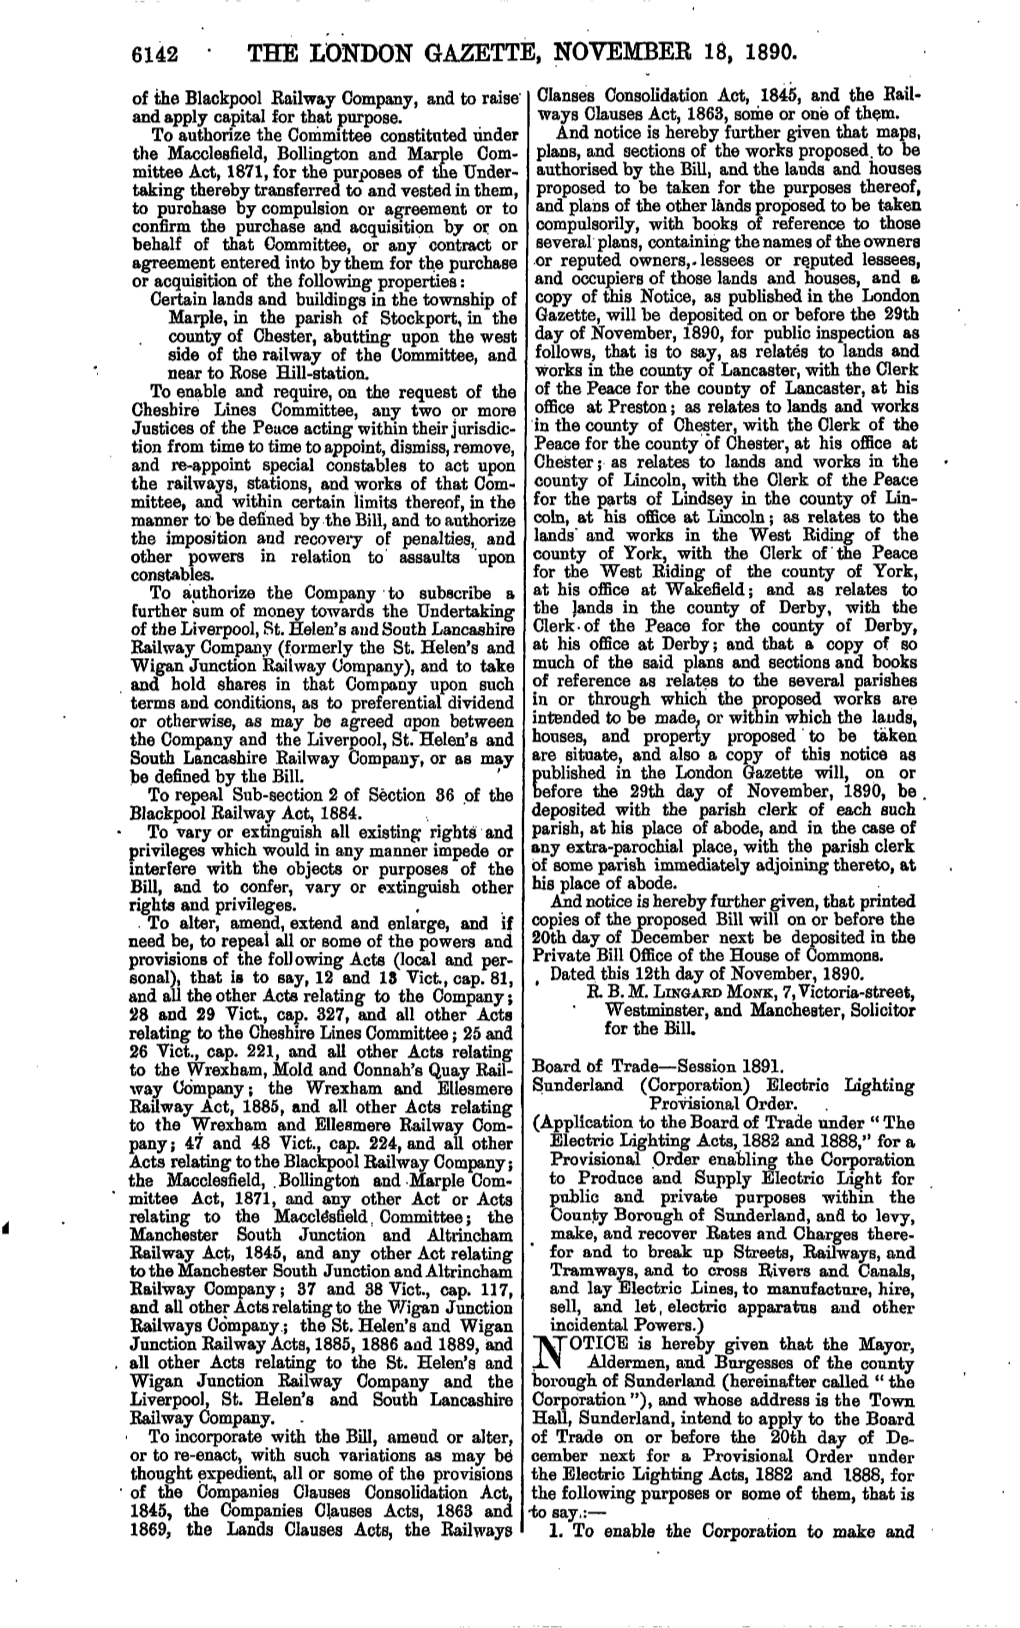 The London Gazette, November 18, 1890